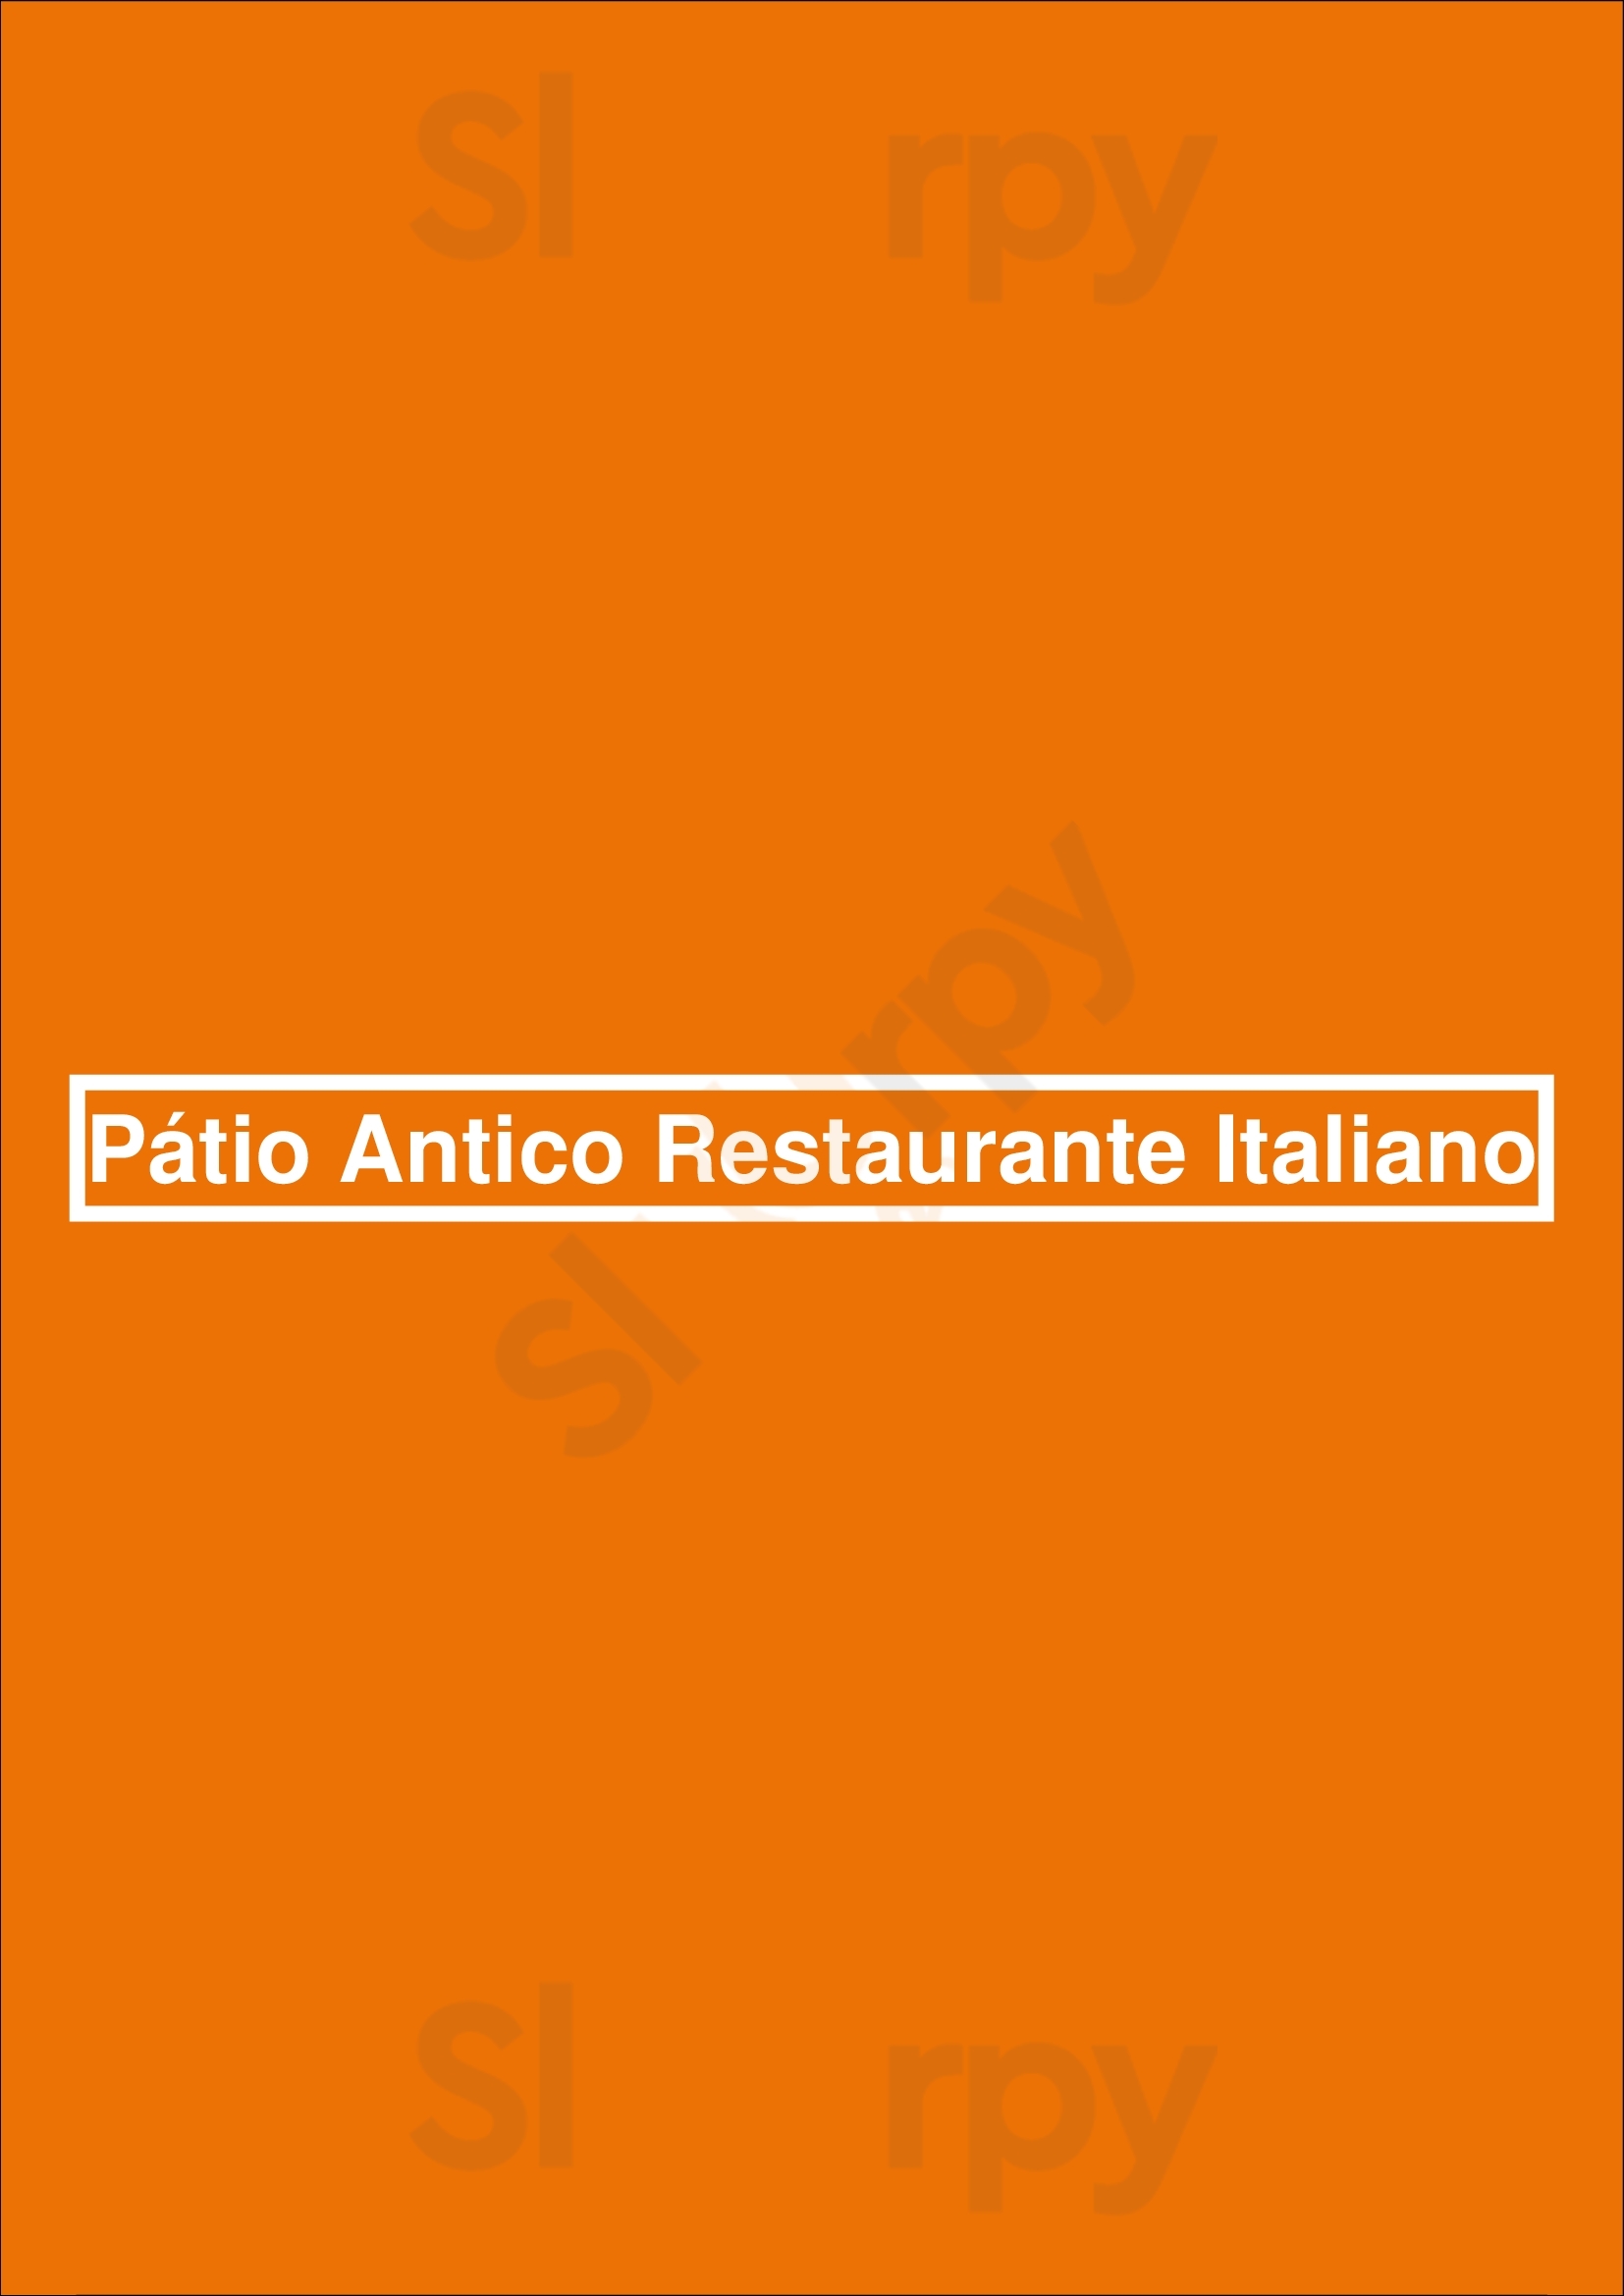 Pátio Antico Restaurante Italiano Lisboa Menu - 1